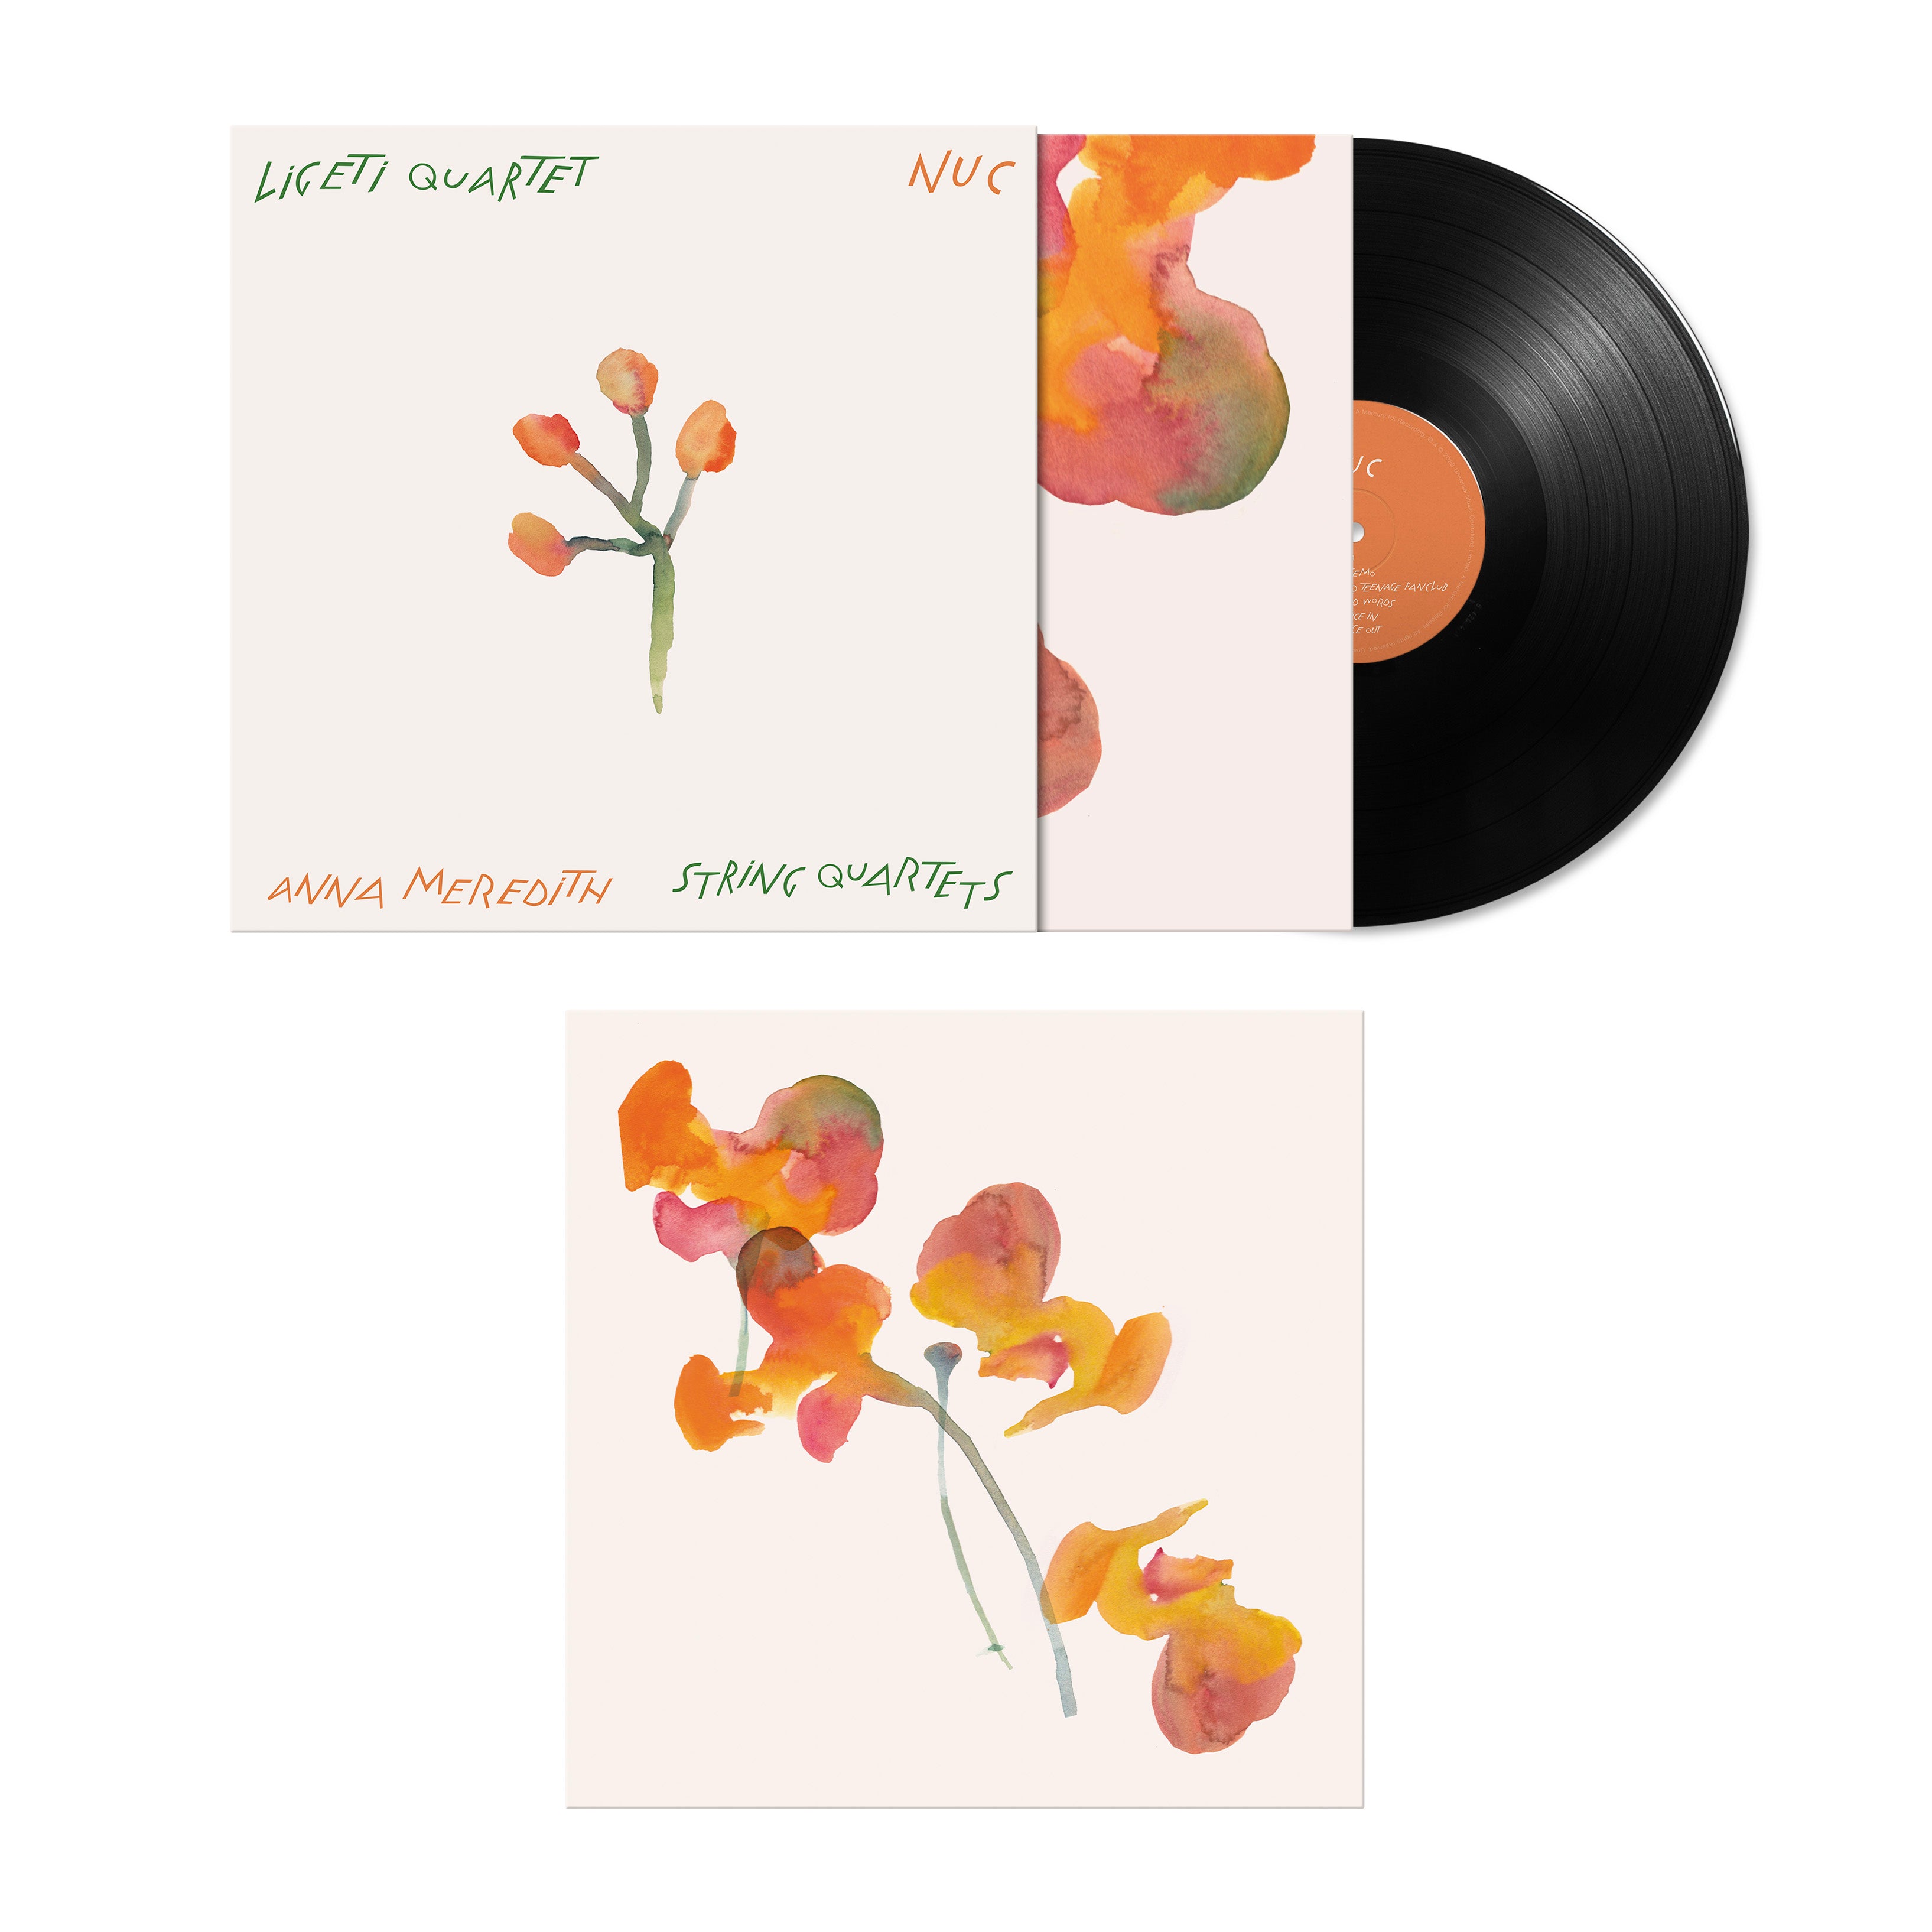 Ligeti Quartet, Anna Meredith - Nuc: LP + Print